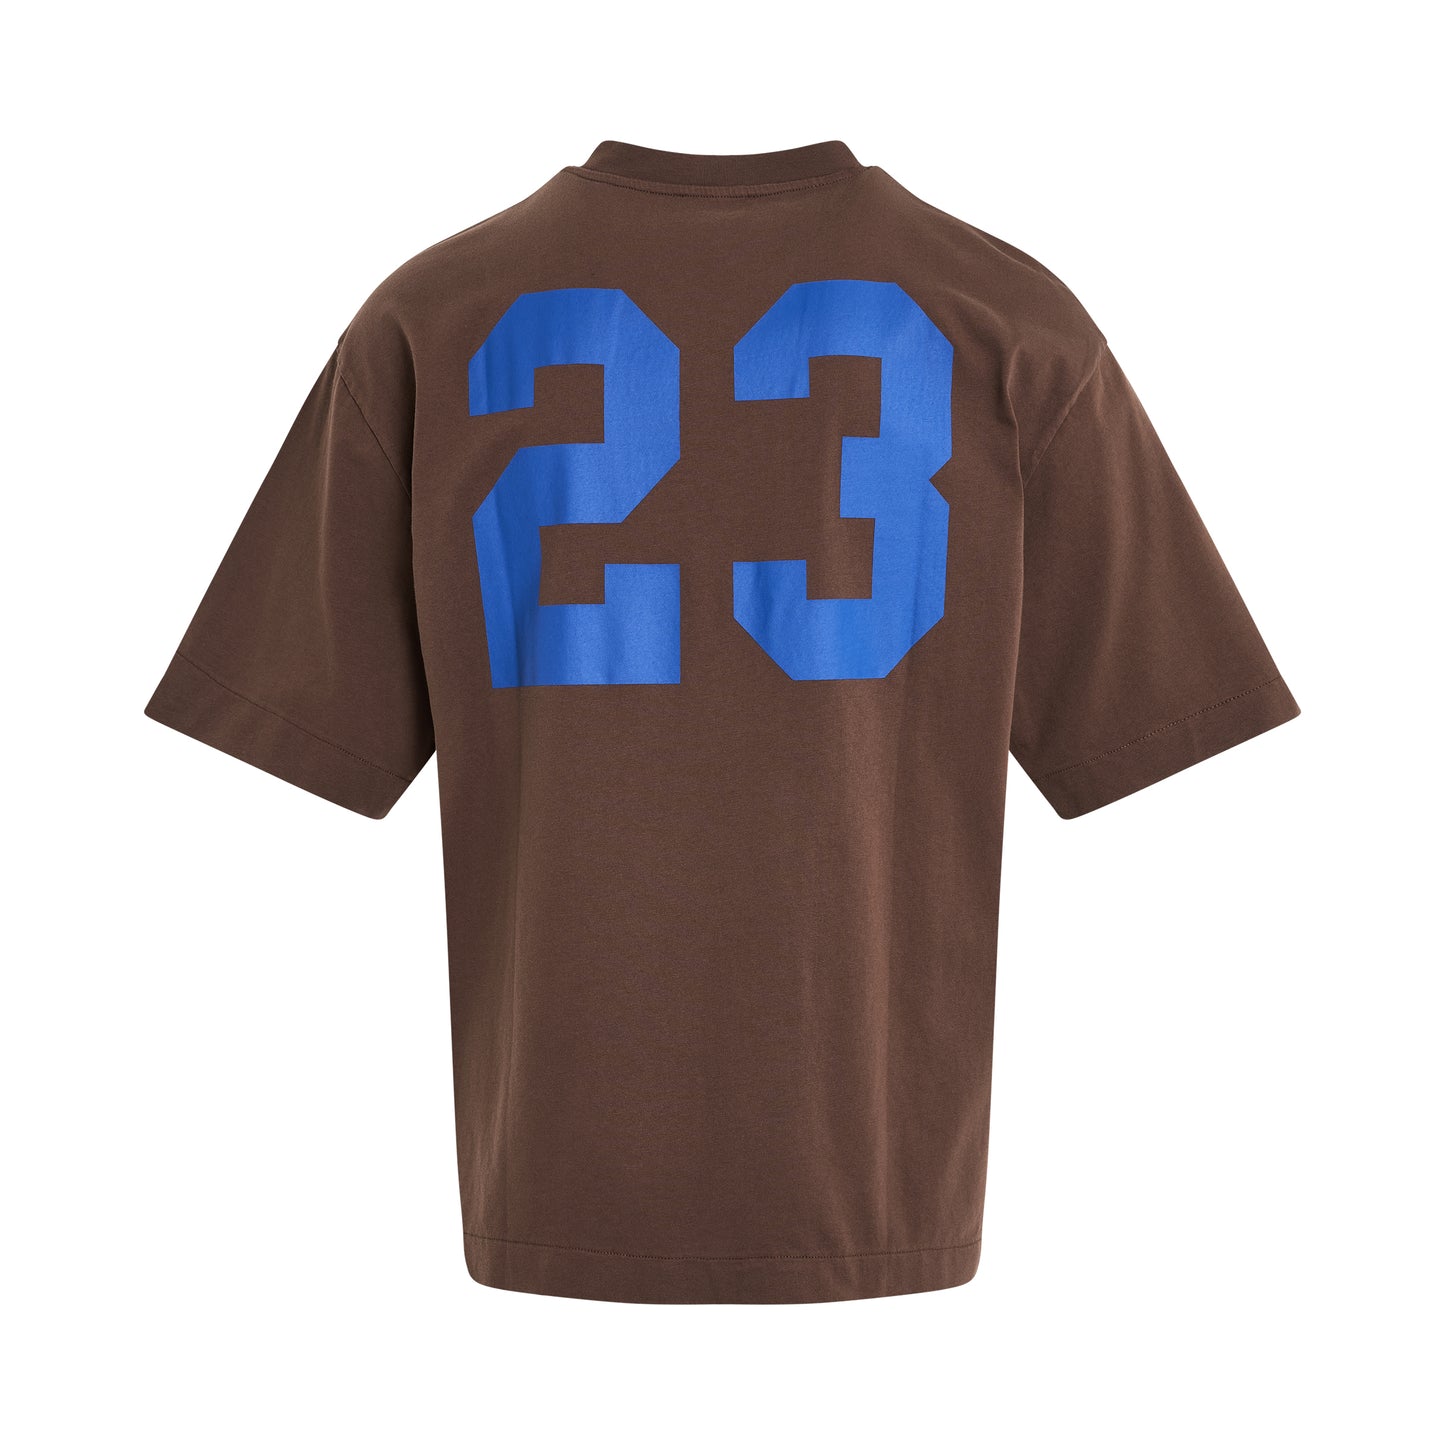 23 Varsity Skate T-Shirt in Brown/Nautical Blue